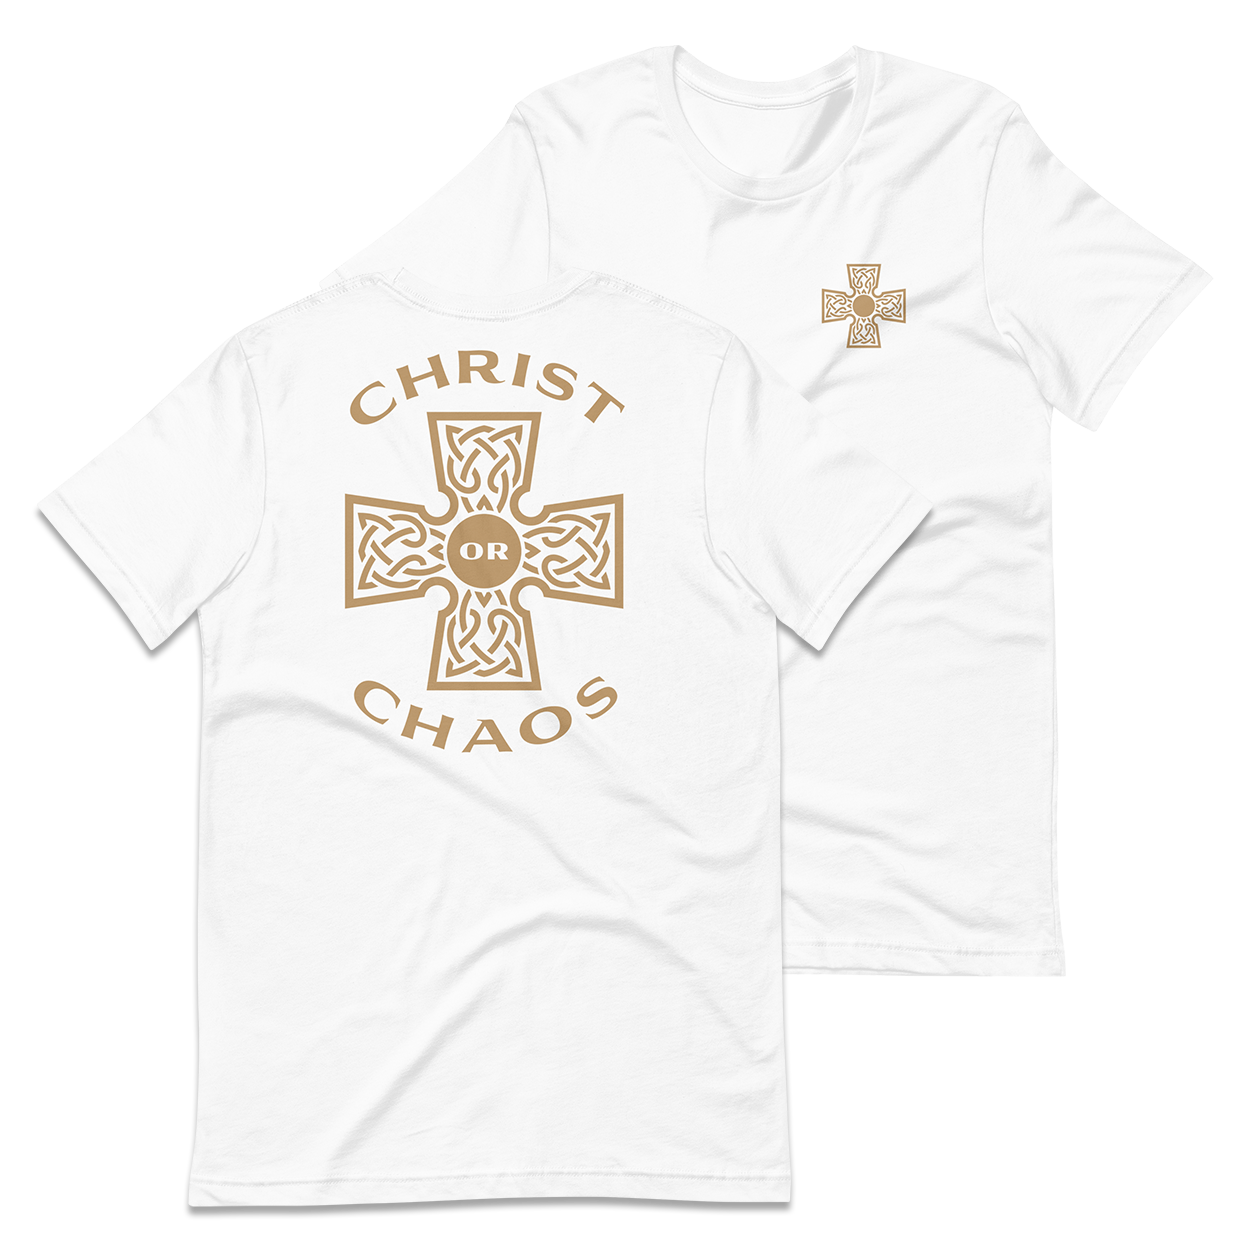 Christ or Chaos T-Shirt